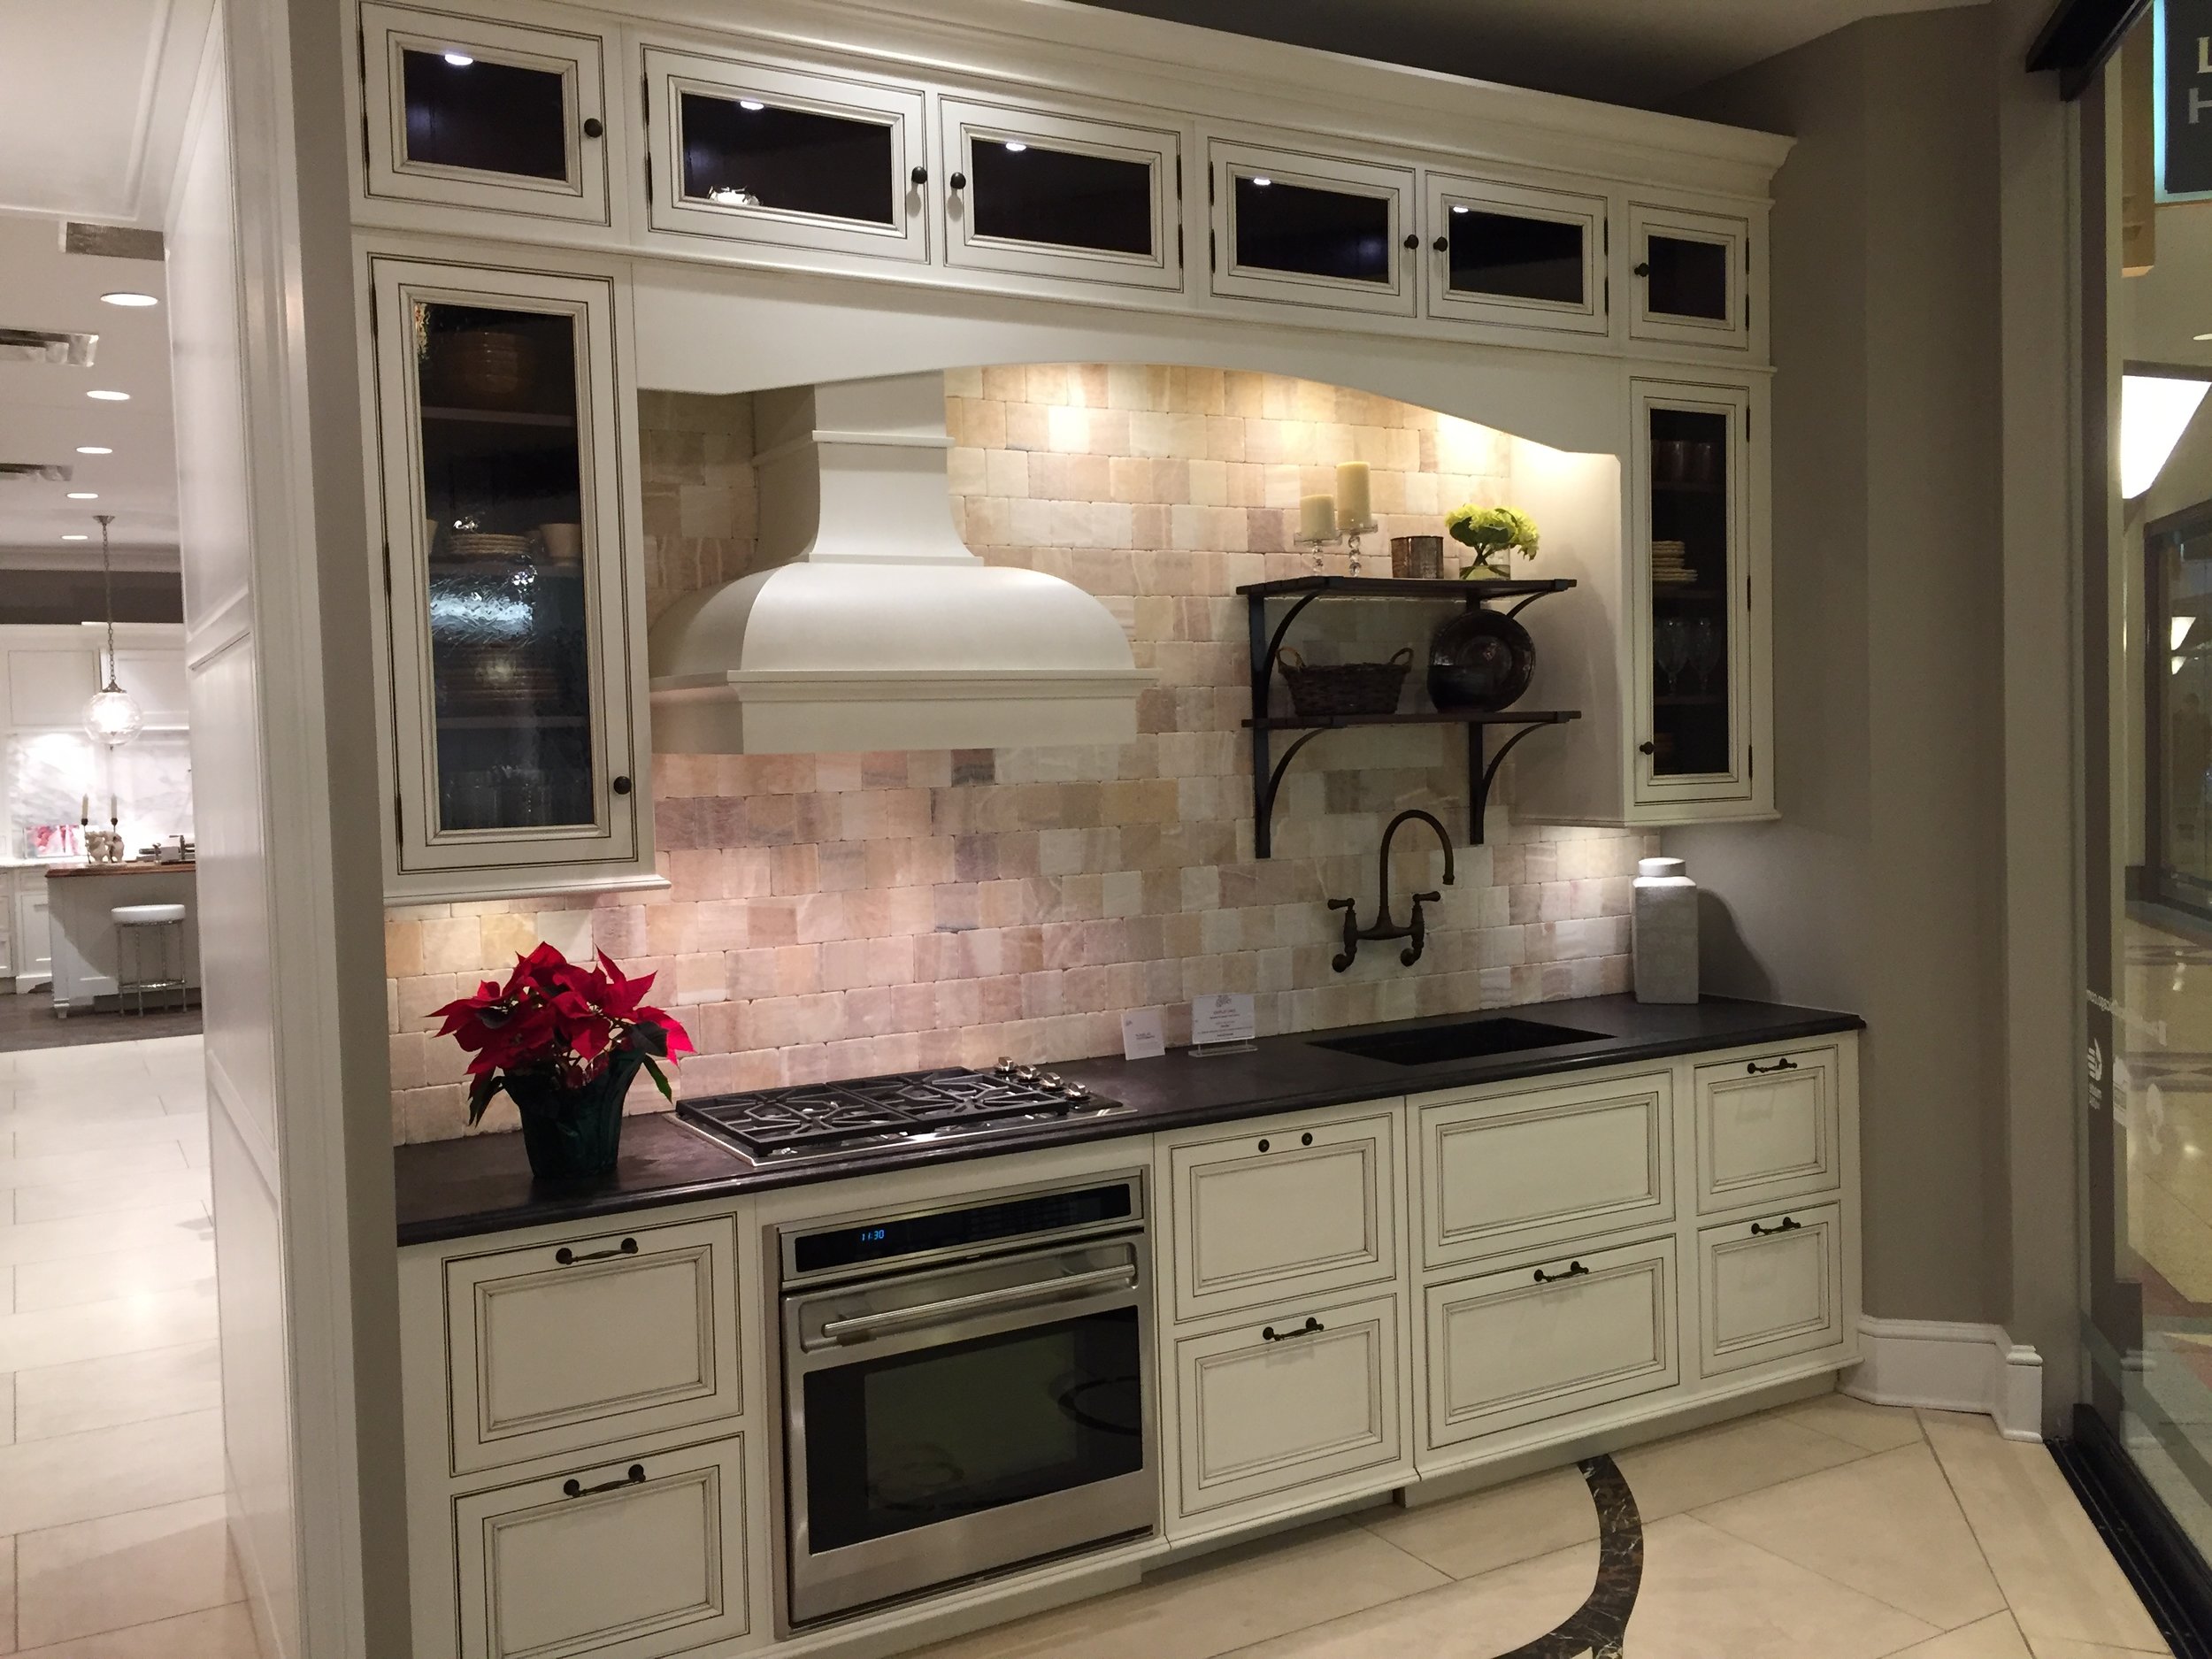 NEW Plain Fancy White Inset Kitchen Cabinets Complete Subzero